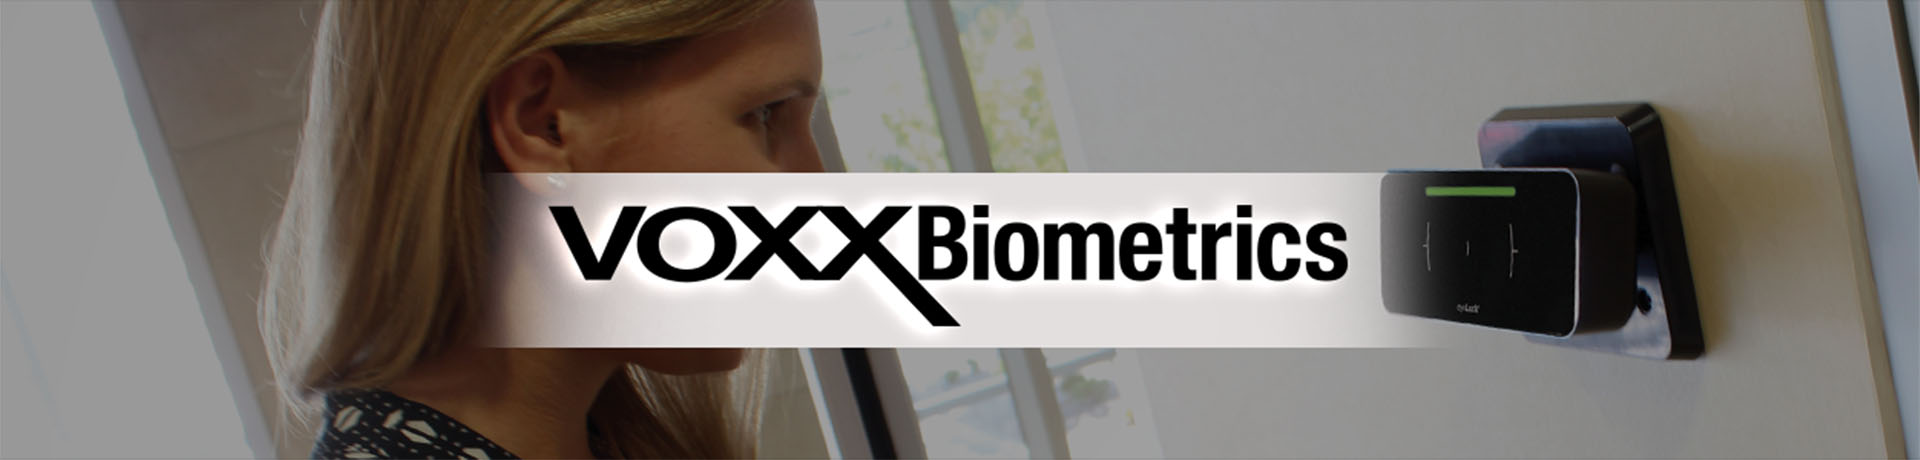 VOXX Biometrics